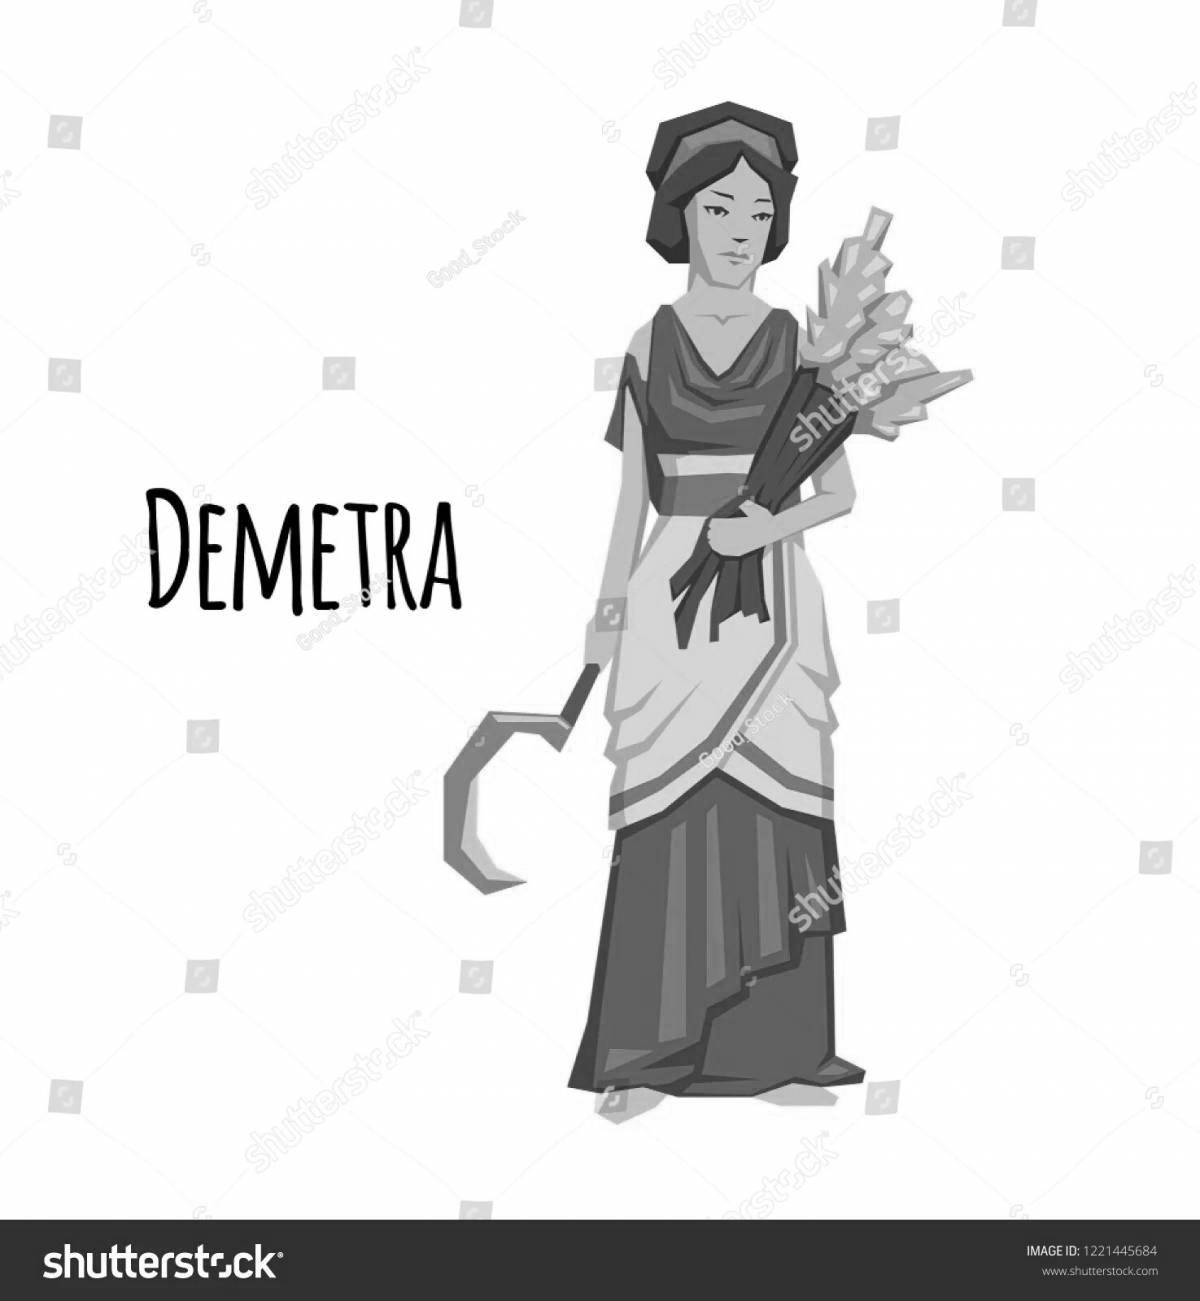 Demeter's fancy coloring